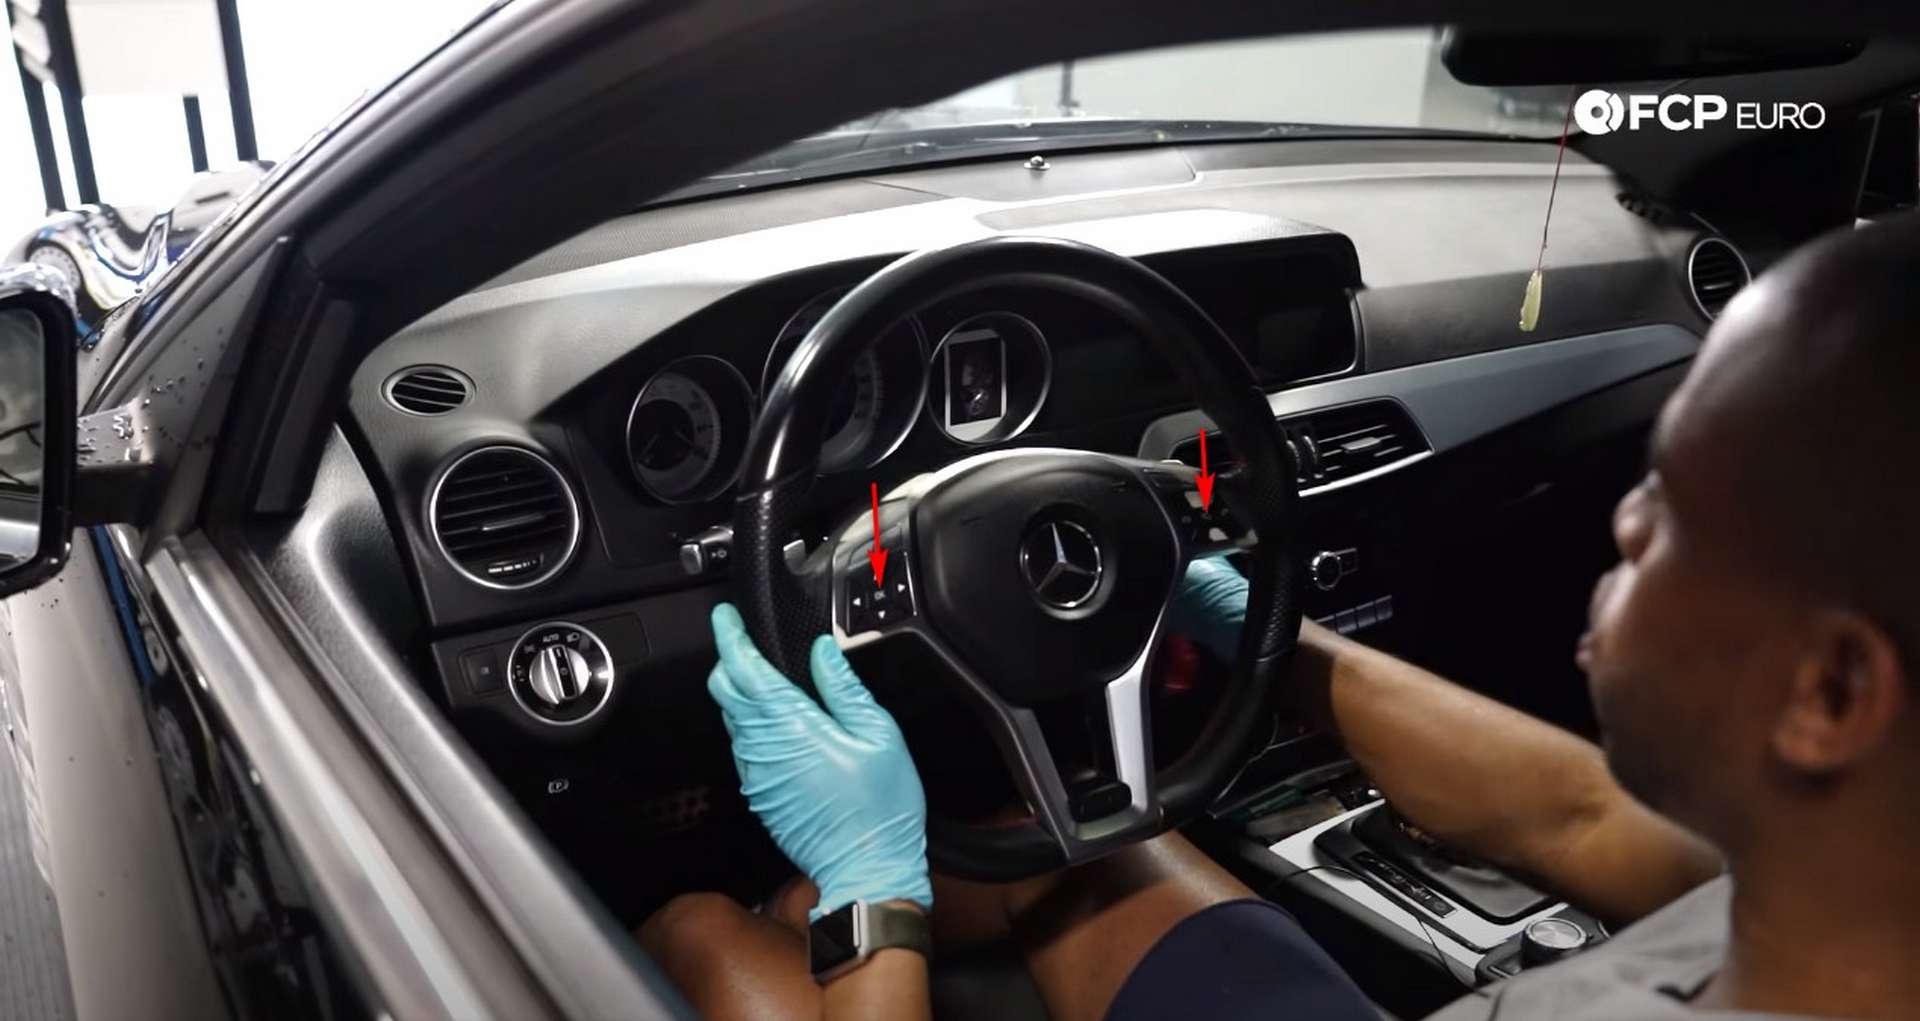 DIY Mercedes M271 Oil Change steering wheel button locations